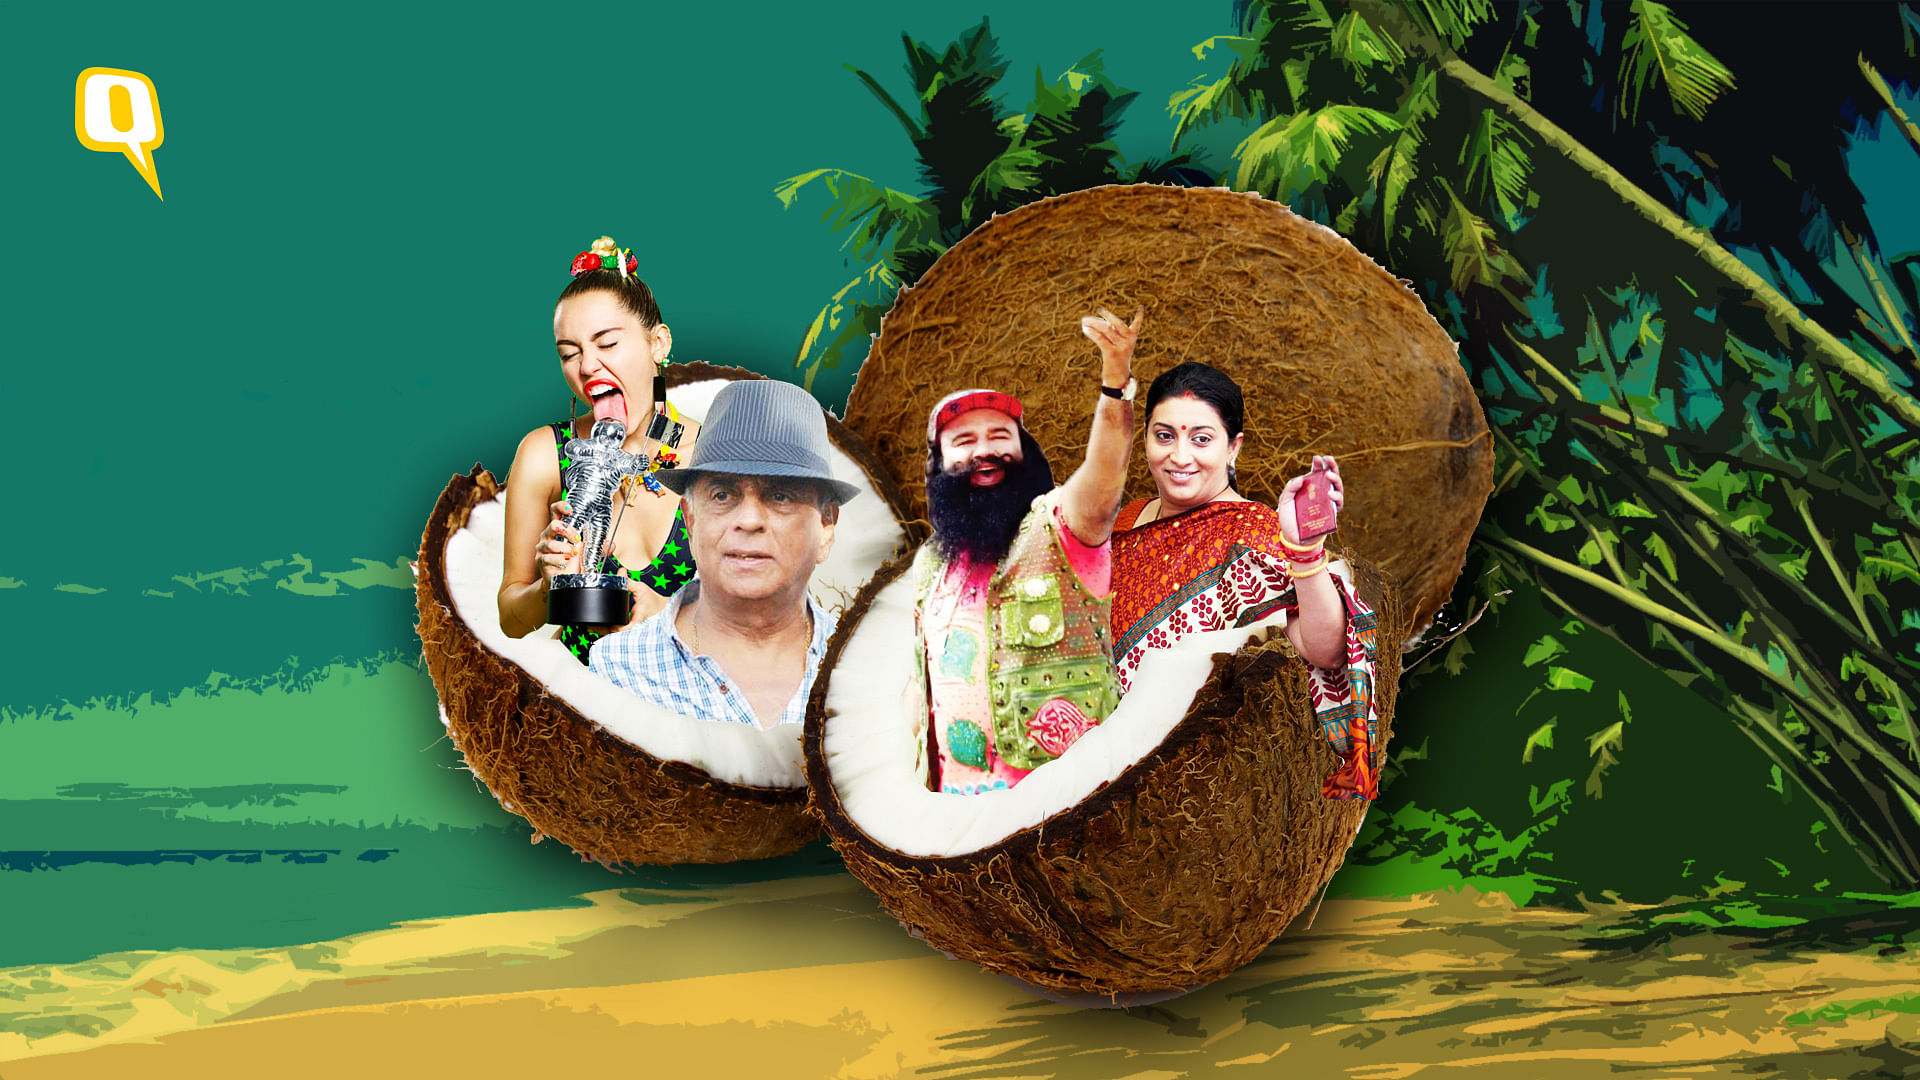 Happy Coconut Day